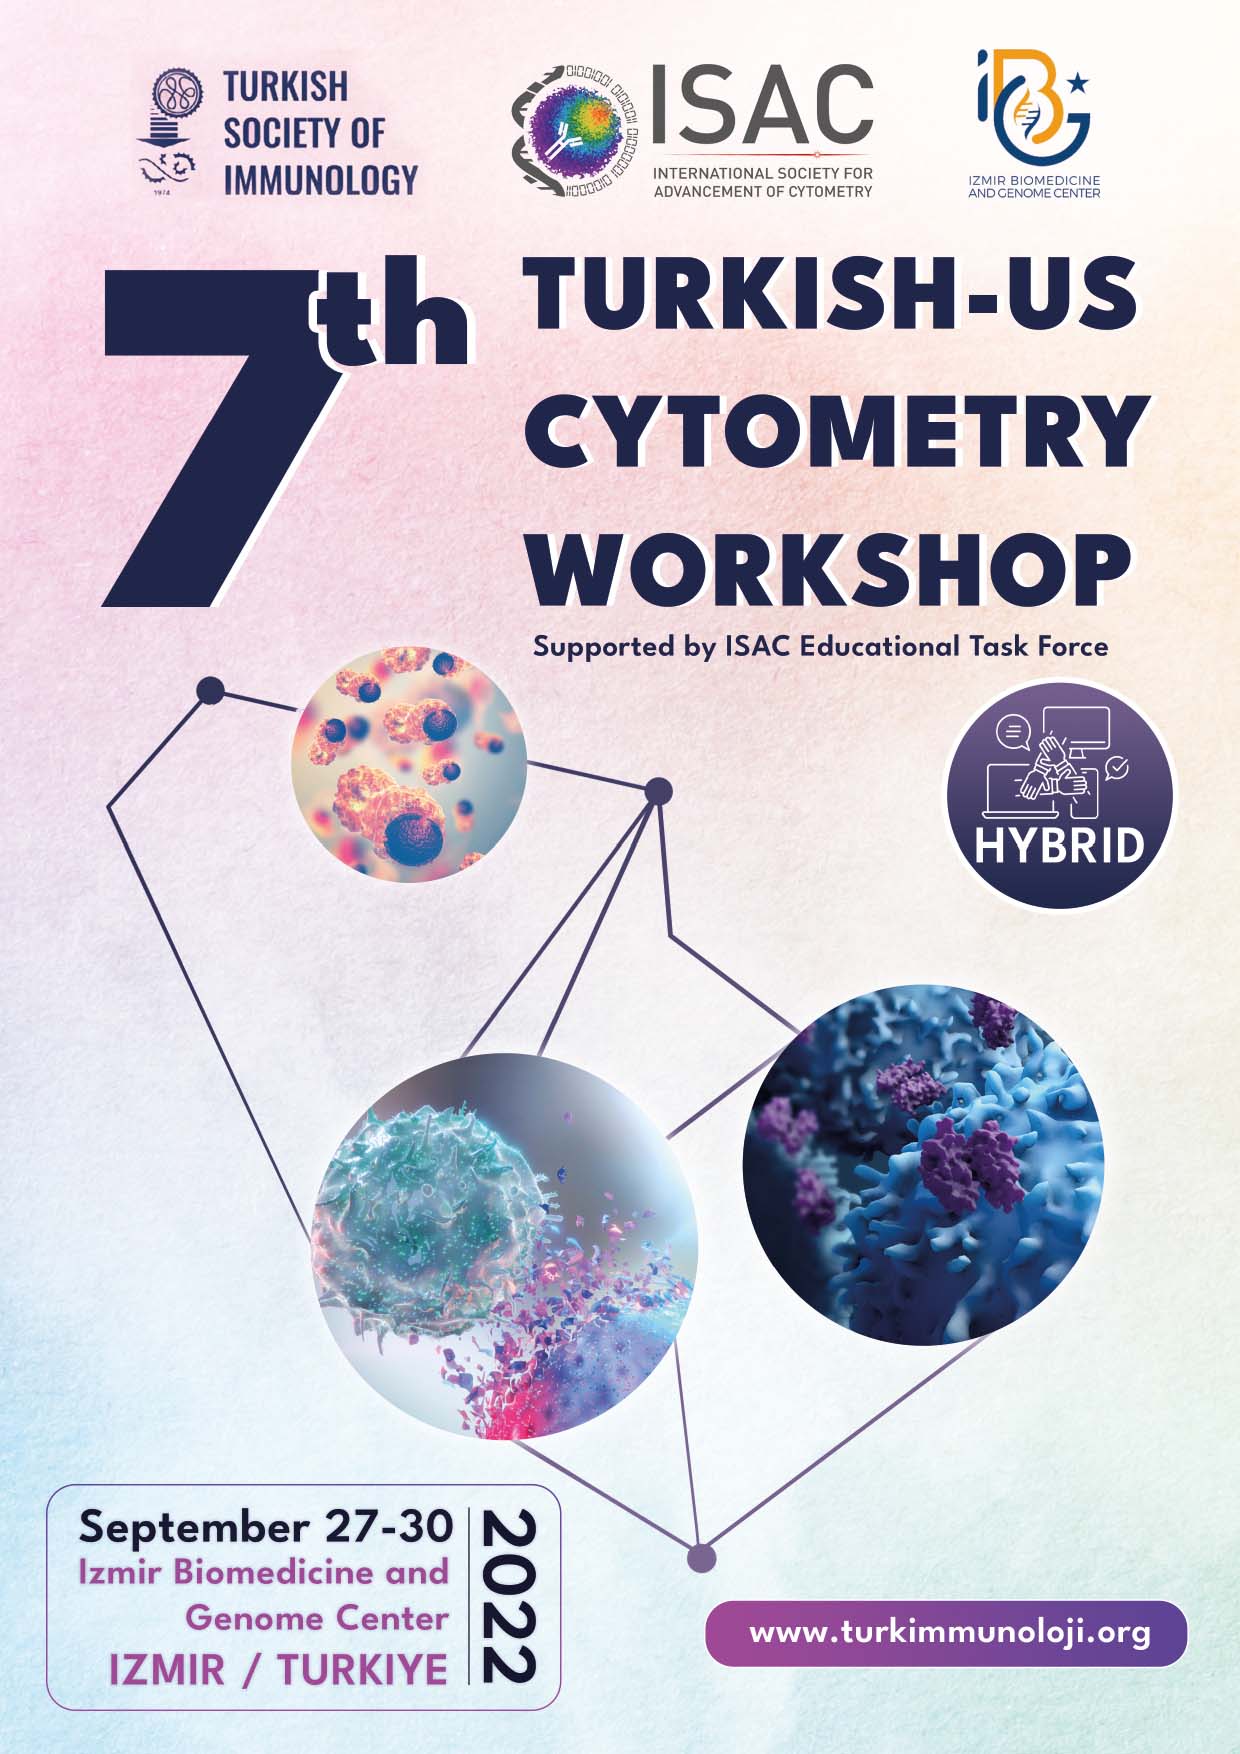 7th Turkish-US Cytometry Workshop